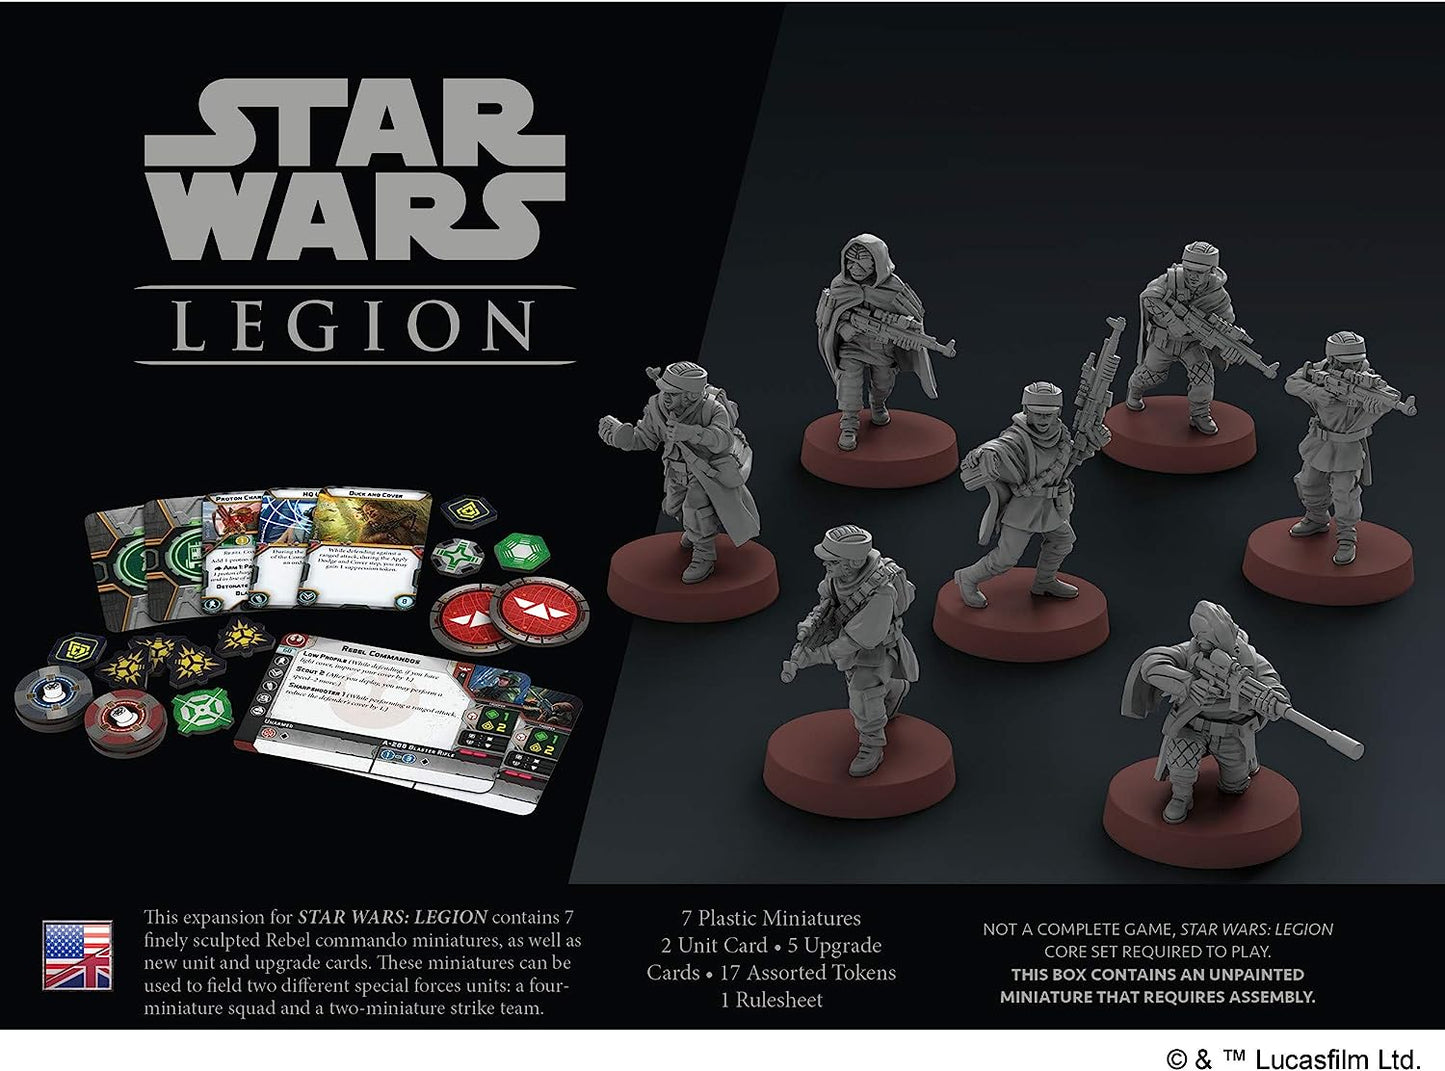 Star Wars: Legion Rebel Commandos Unit Expansion